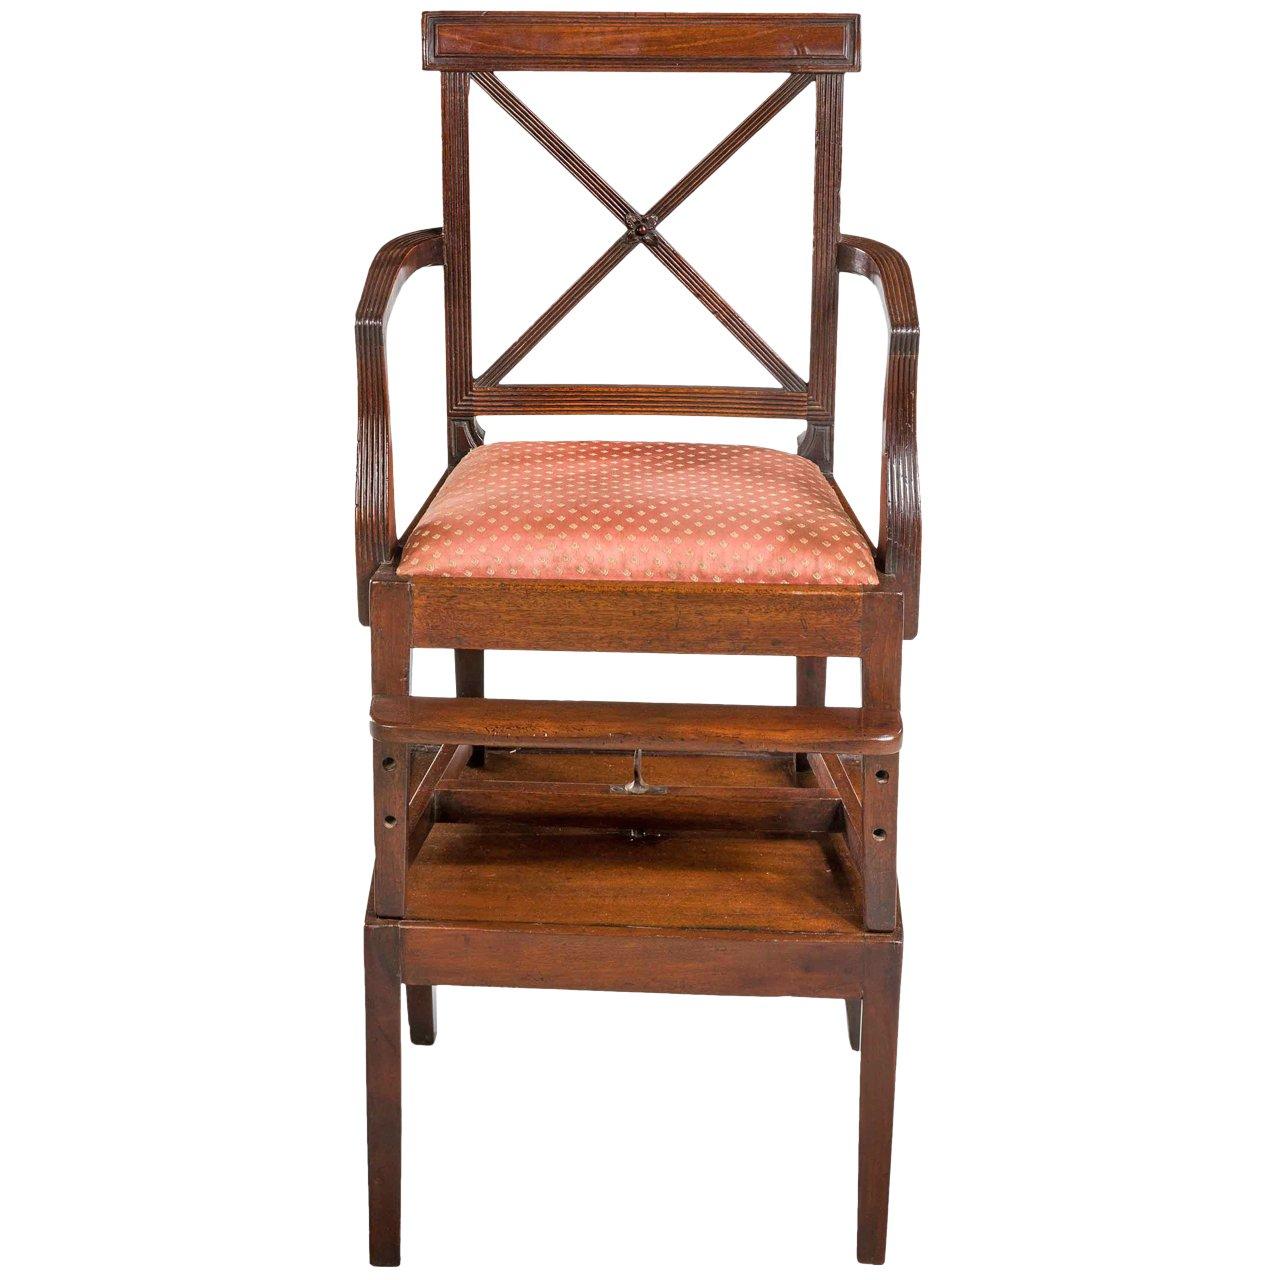 George III Period Mahogany Child's Chair